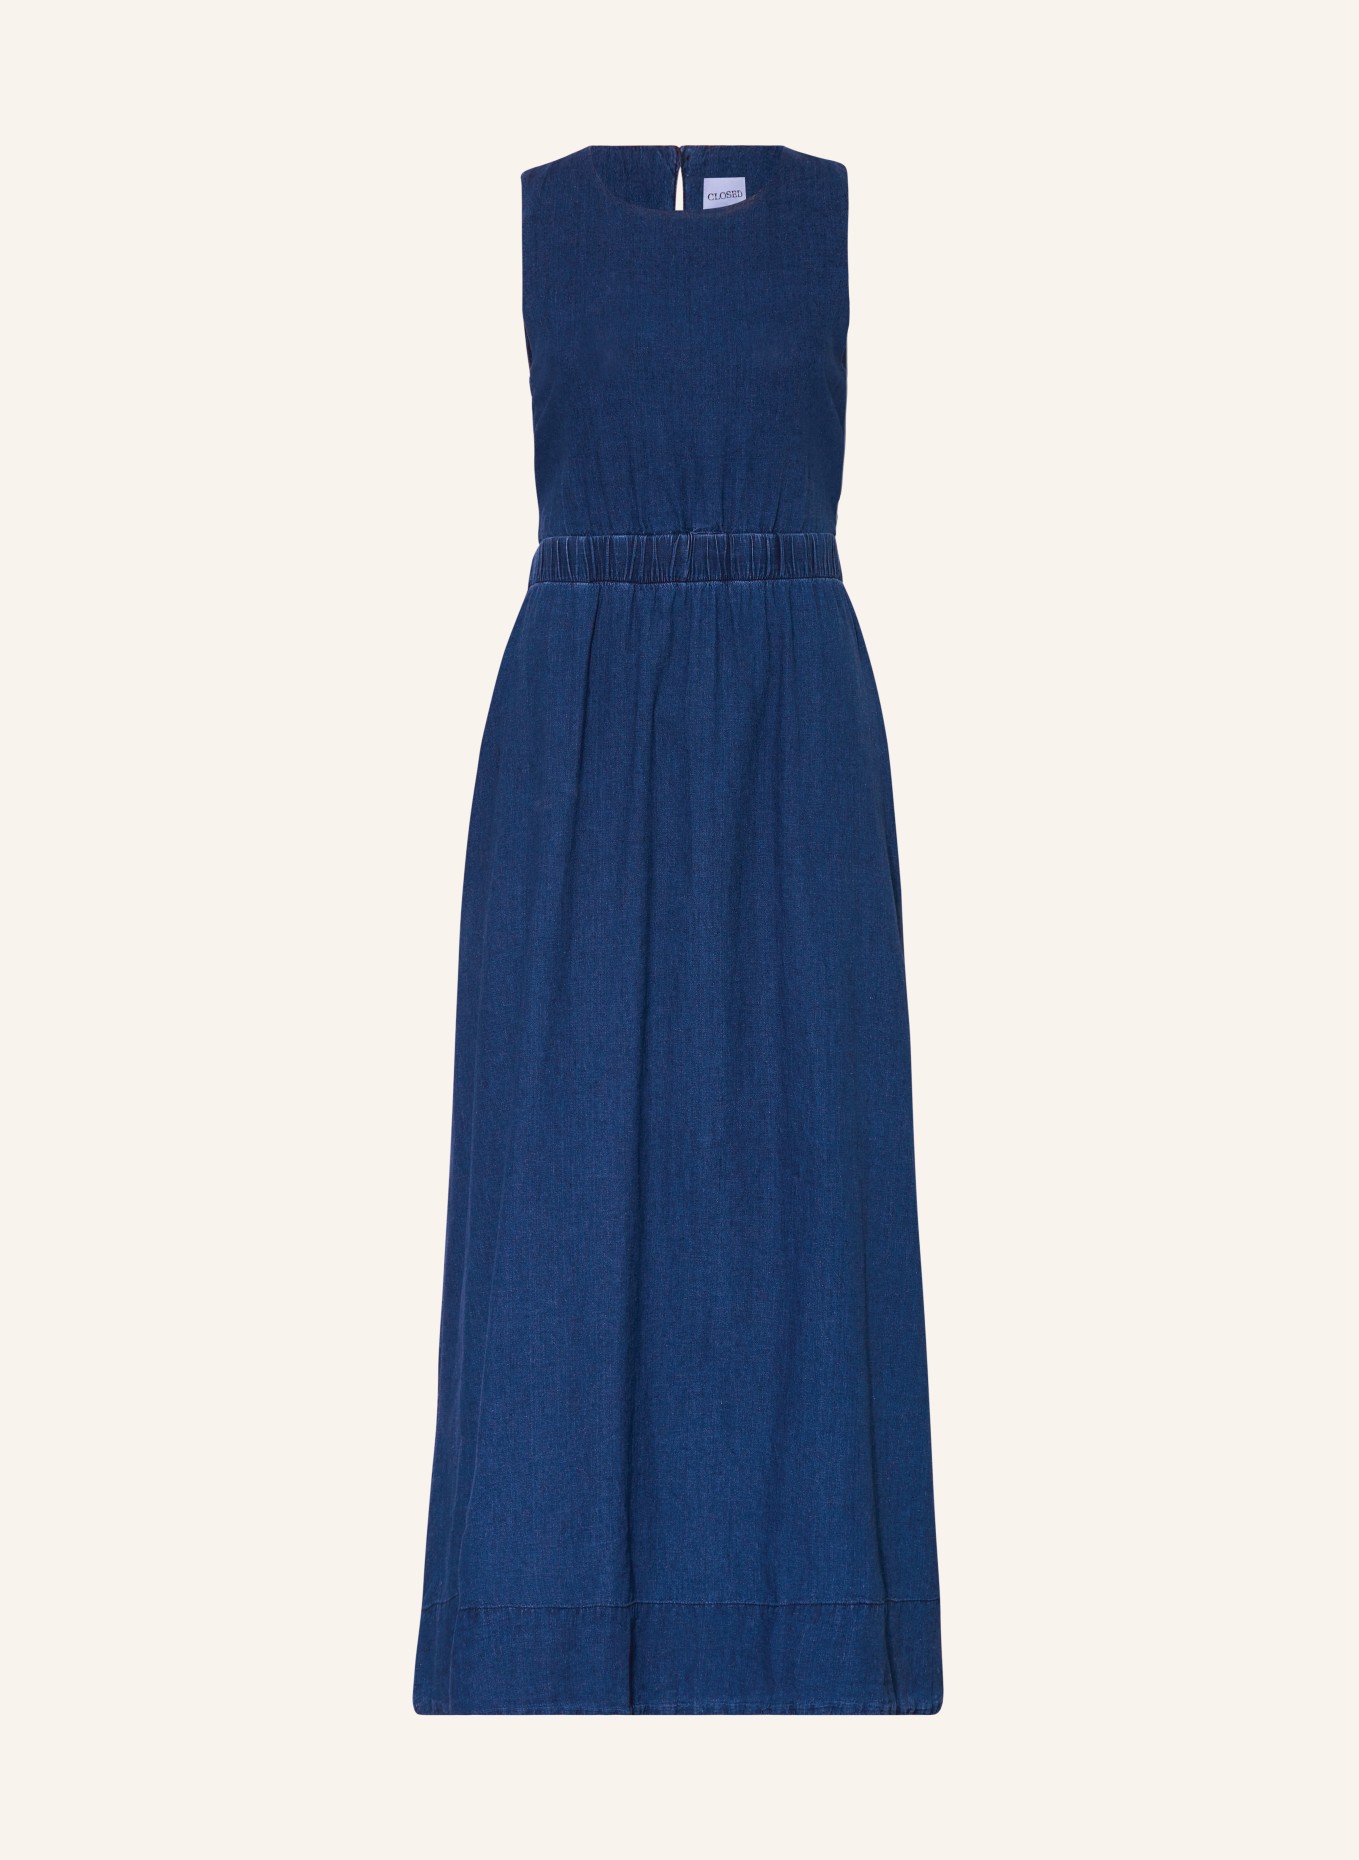 CLOSED Kleid in Jeansoptik mit Cut-out, Farbe: DUNKELBLAU (Bild 1)